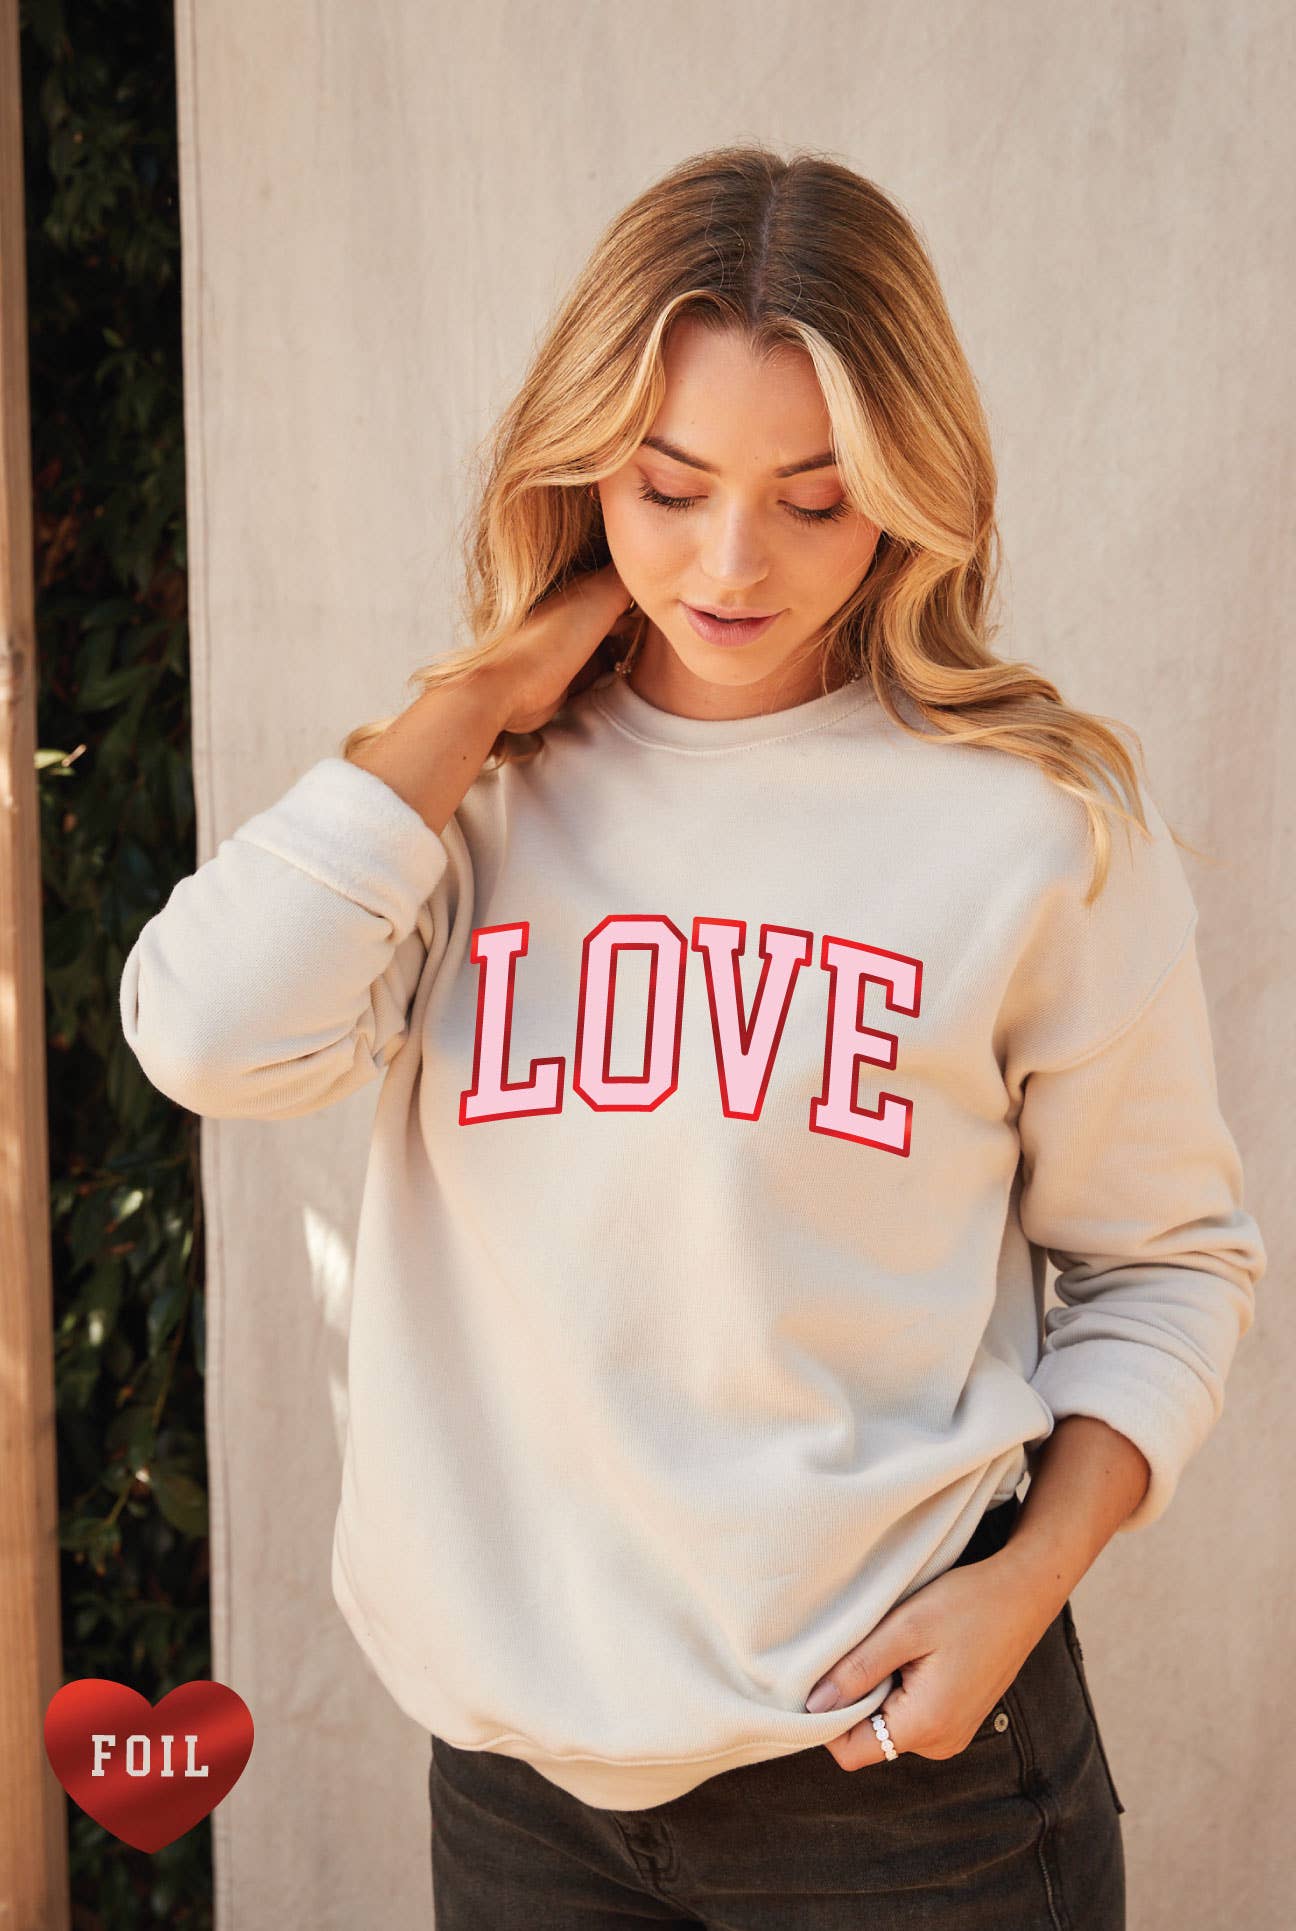 LOVE FOIL Graphic Sweatshirt: M / ROSE